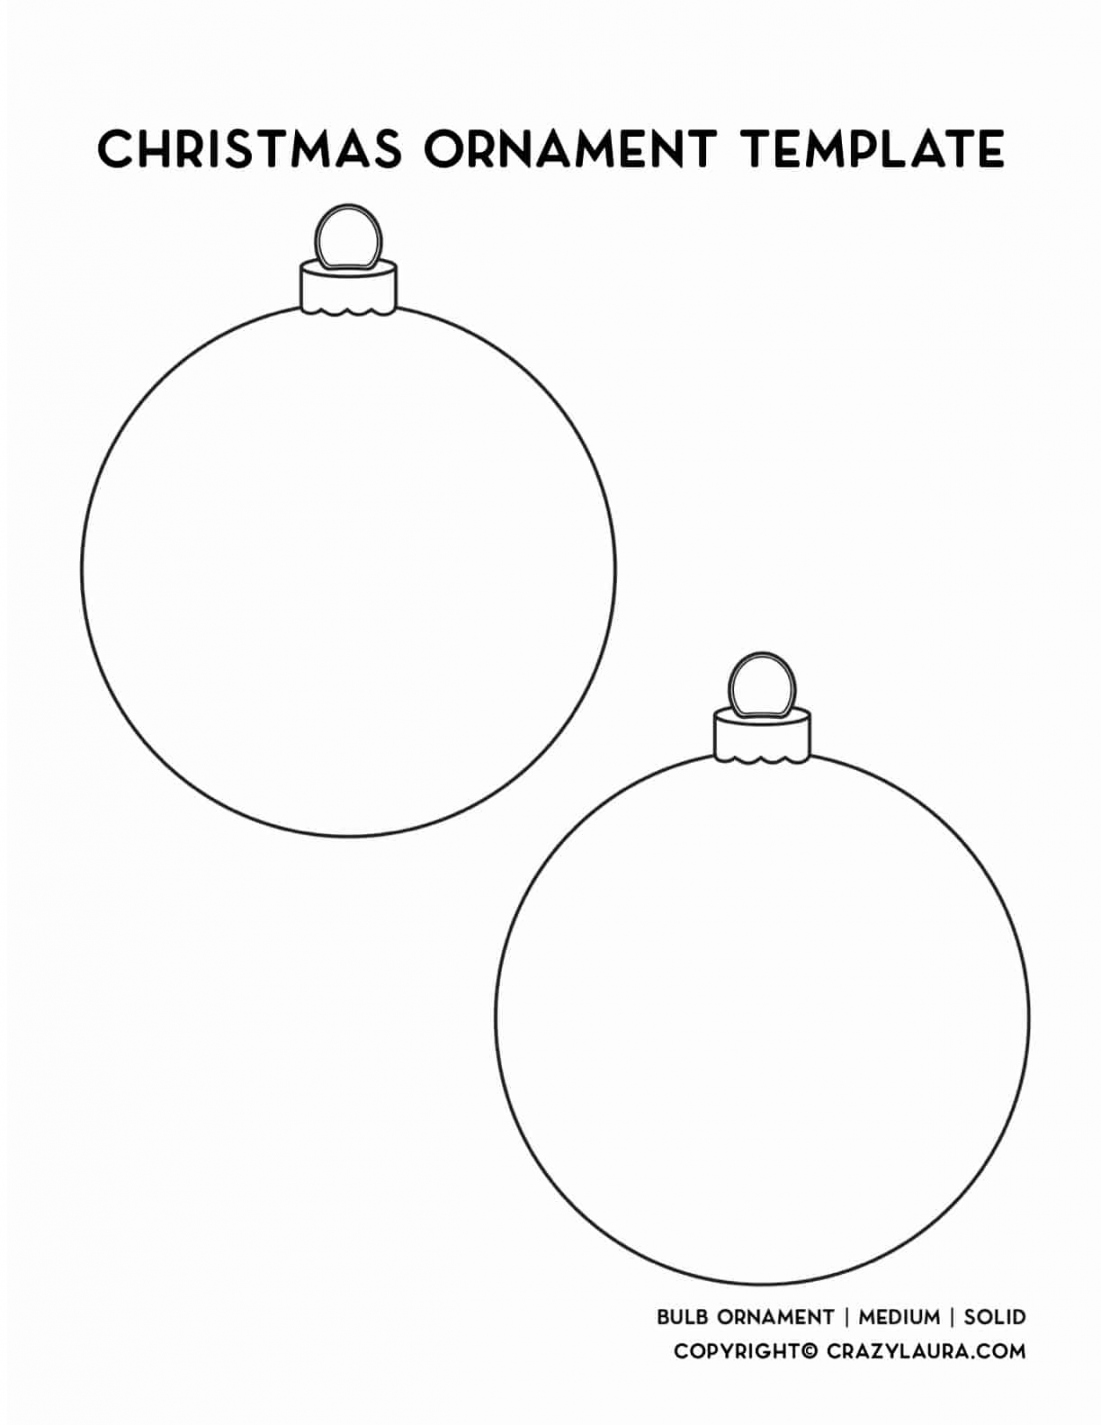 Free Christmas Ornament Template Printables & Outlines - Crazy Laura - FREE Printables - Outline Christmas Ornament Template